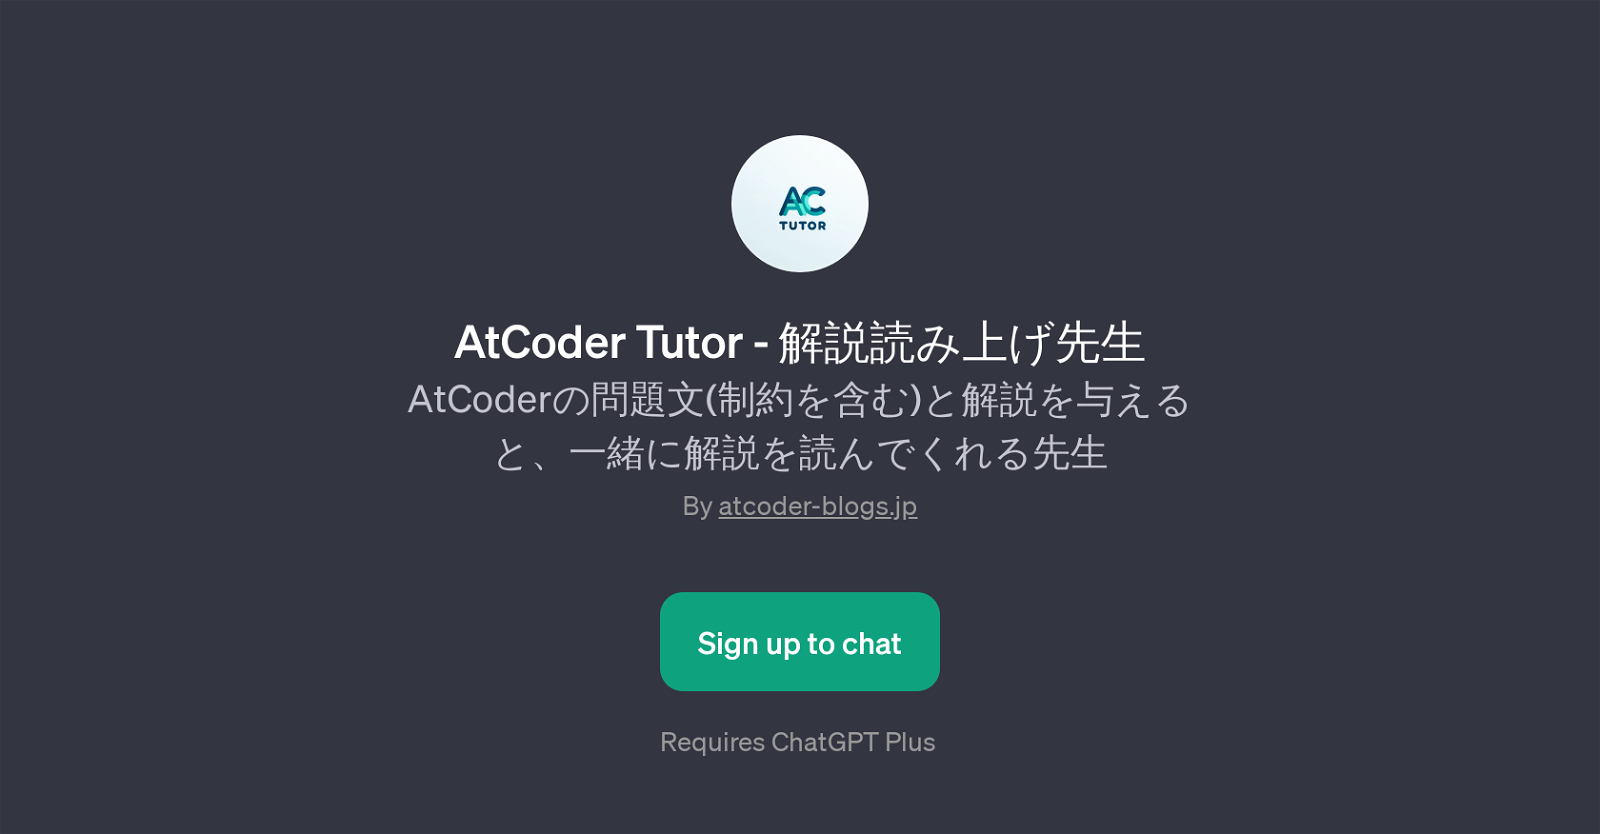 AtCoder Tutor website